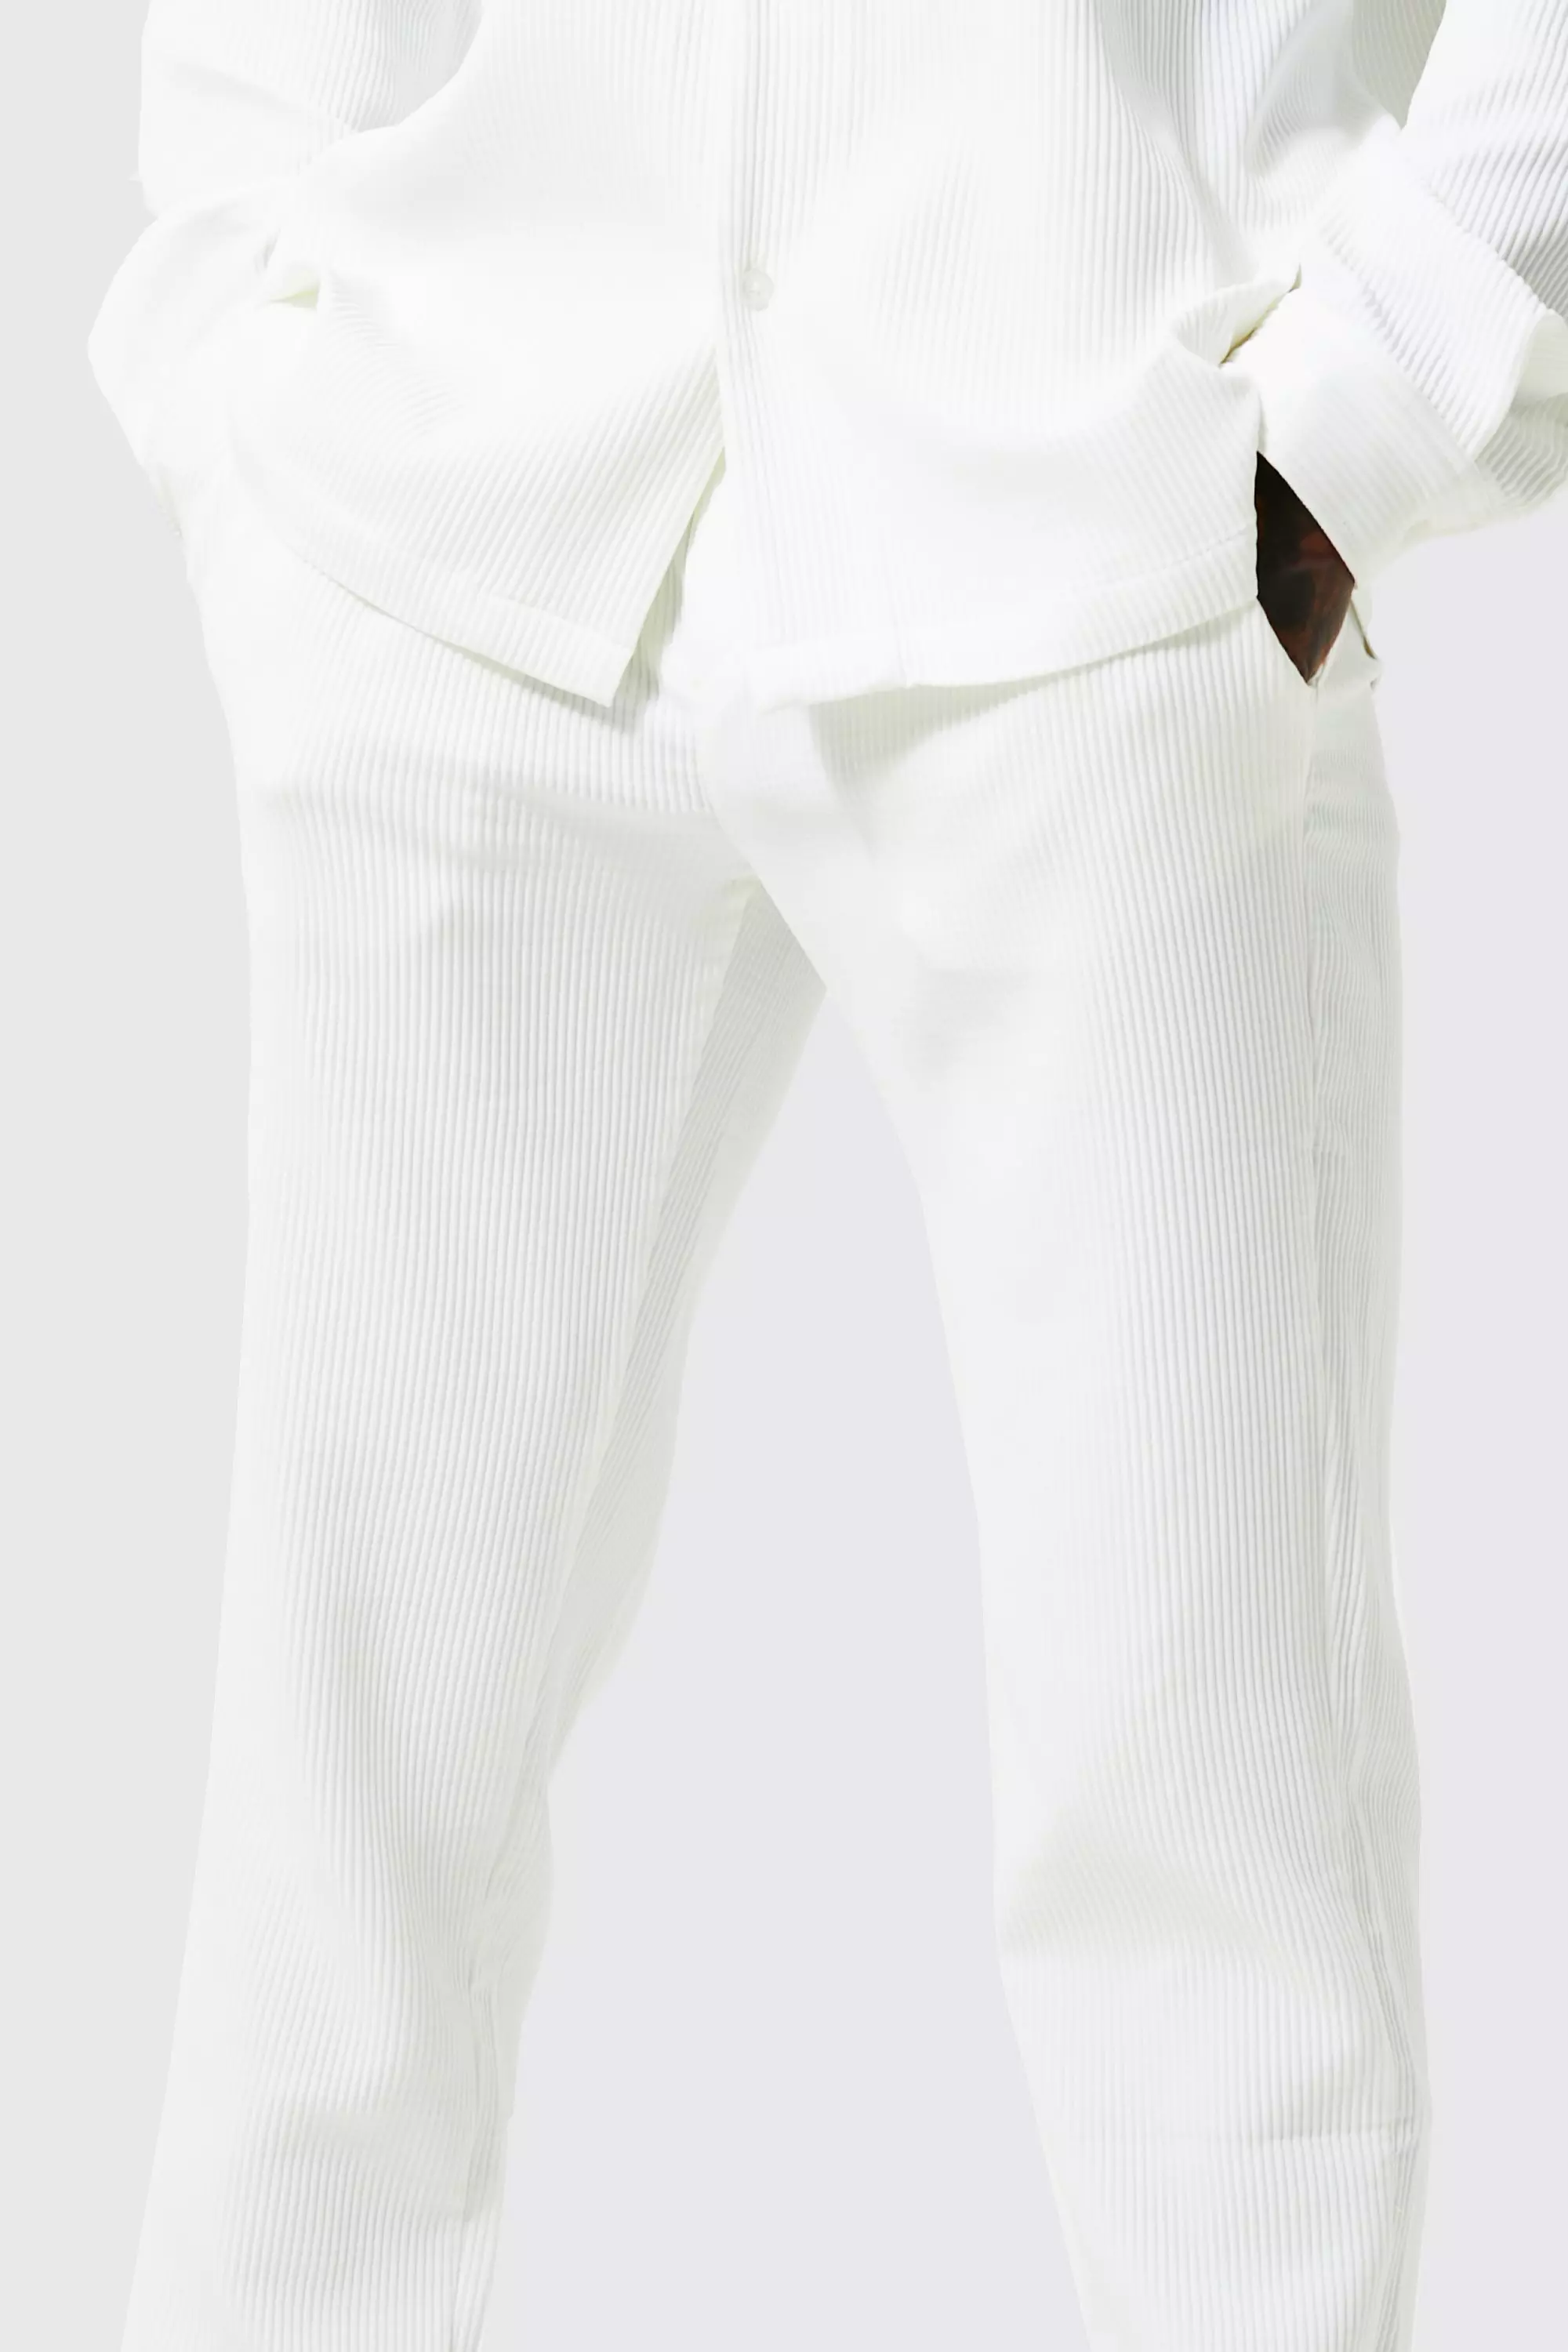 Homme Plisse Issey Miyake Men's Pleated Slim-Fit Trousers